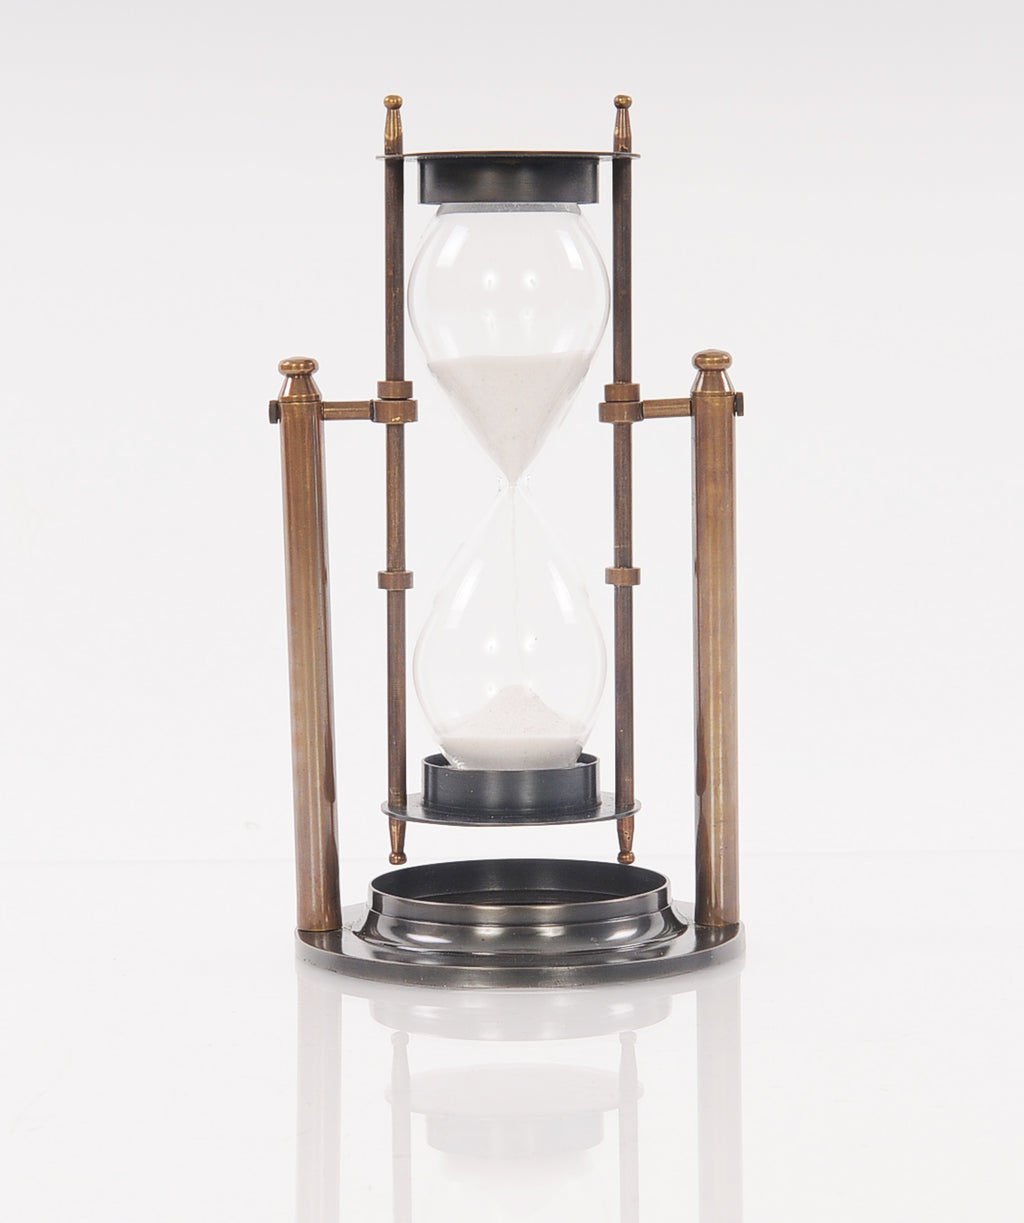 Antique Look Revolving Hourglass